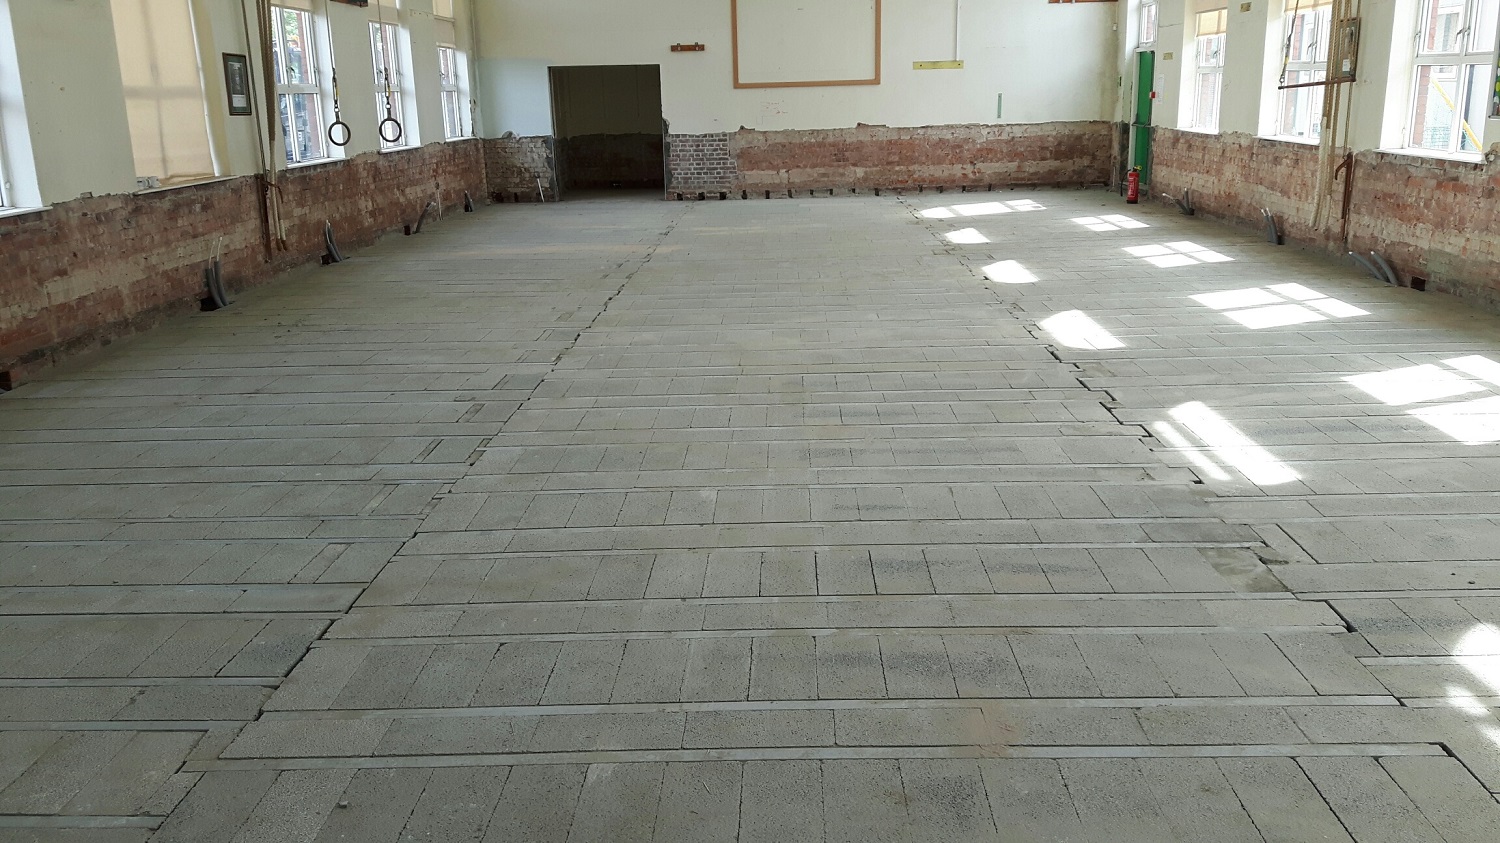 School Hall Refurbishment